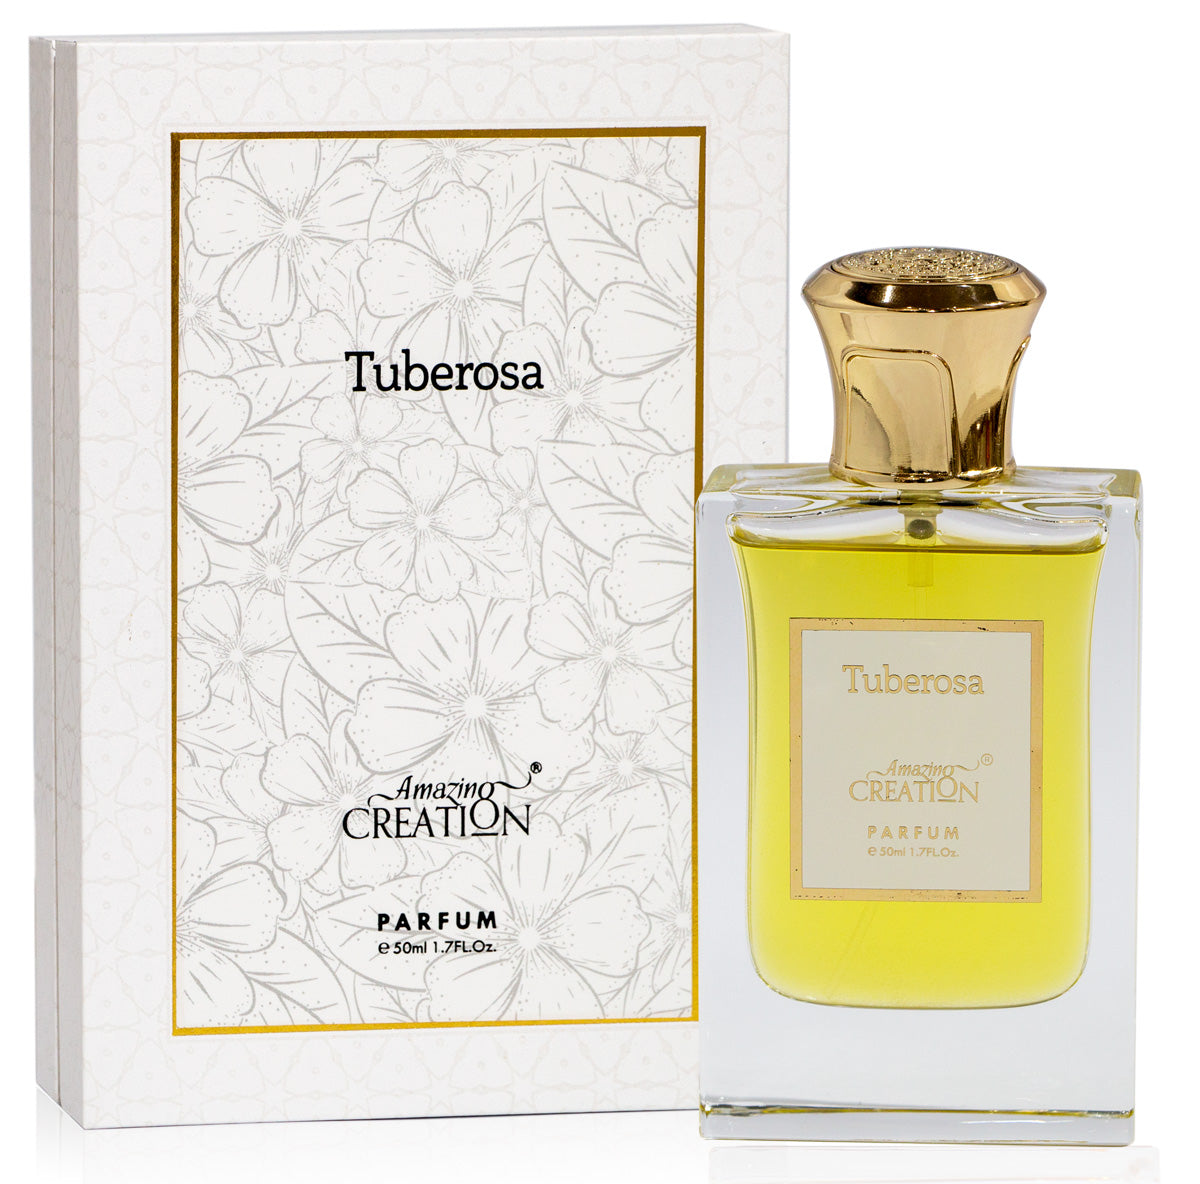 Tuberosa by Amazing Creation, Perfume for Women, Parfum, 50 ml - samawa perfumes 